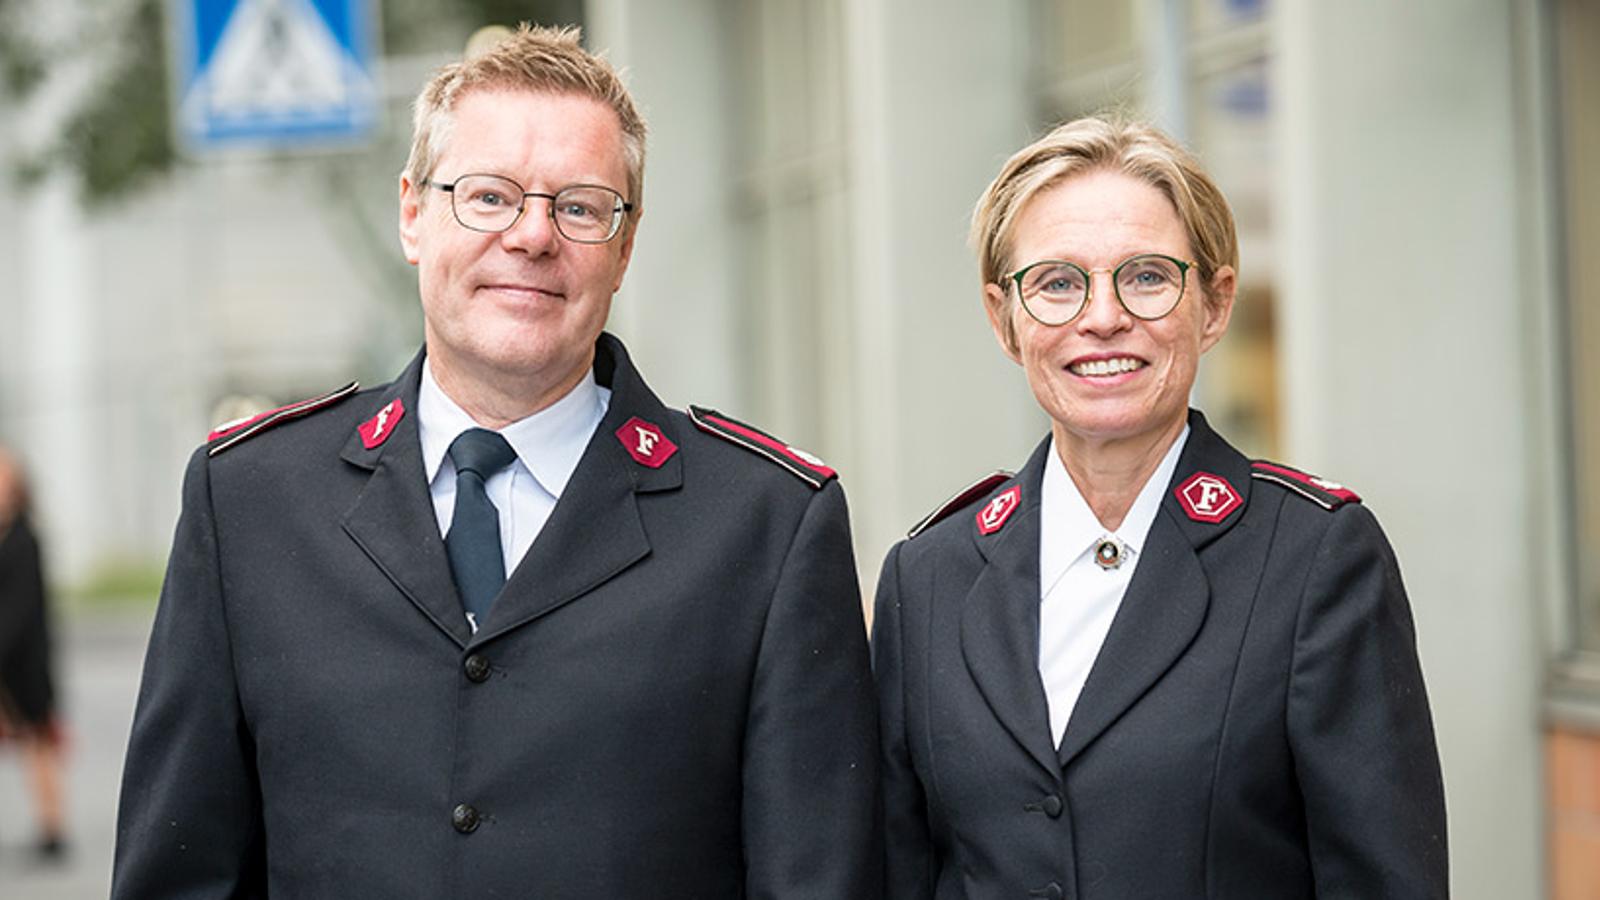 Majorerna Bo och Christina Jeppsson, Frälsningsarméns ledare i Sverige.